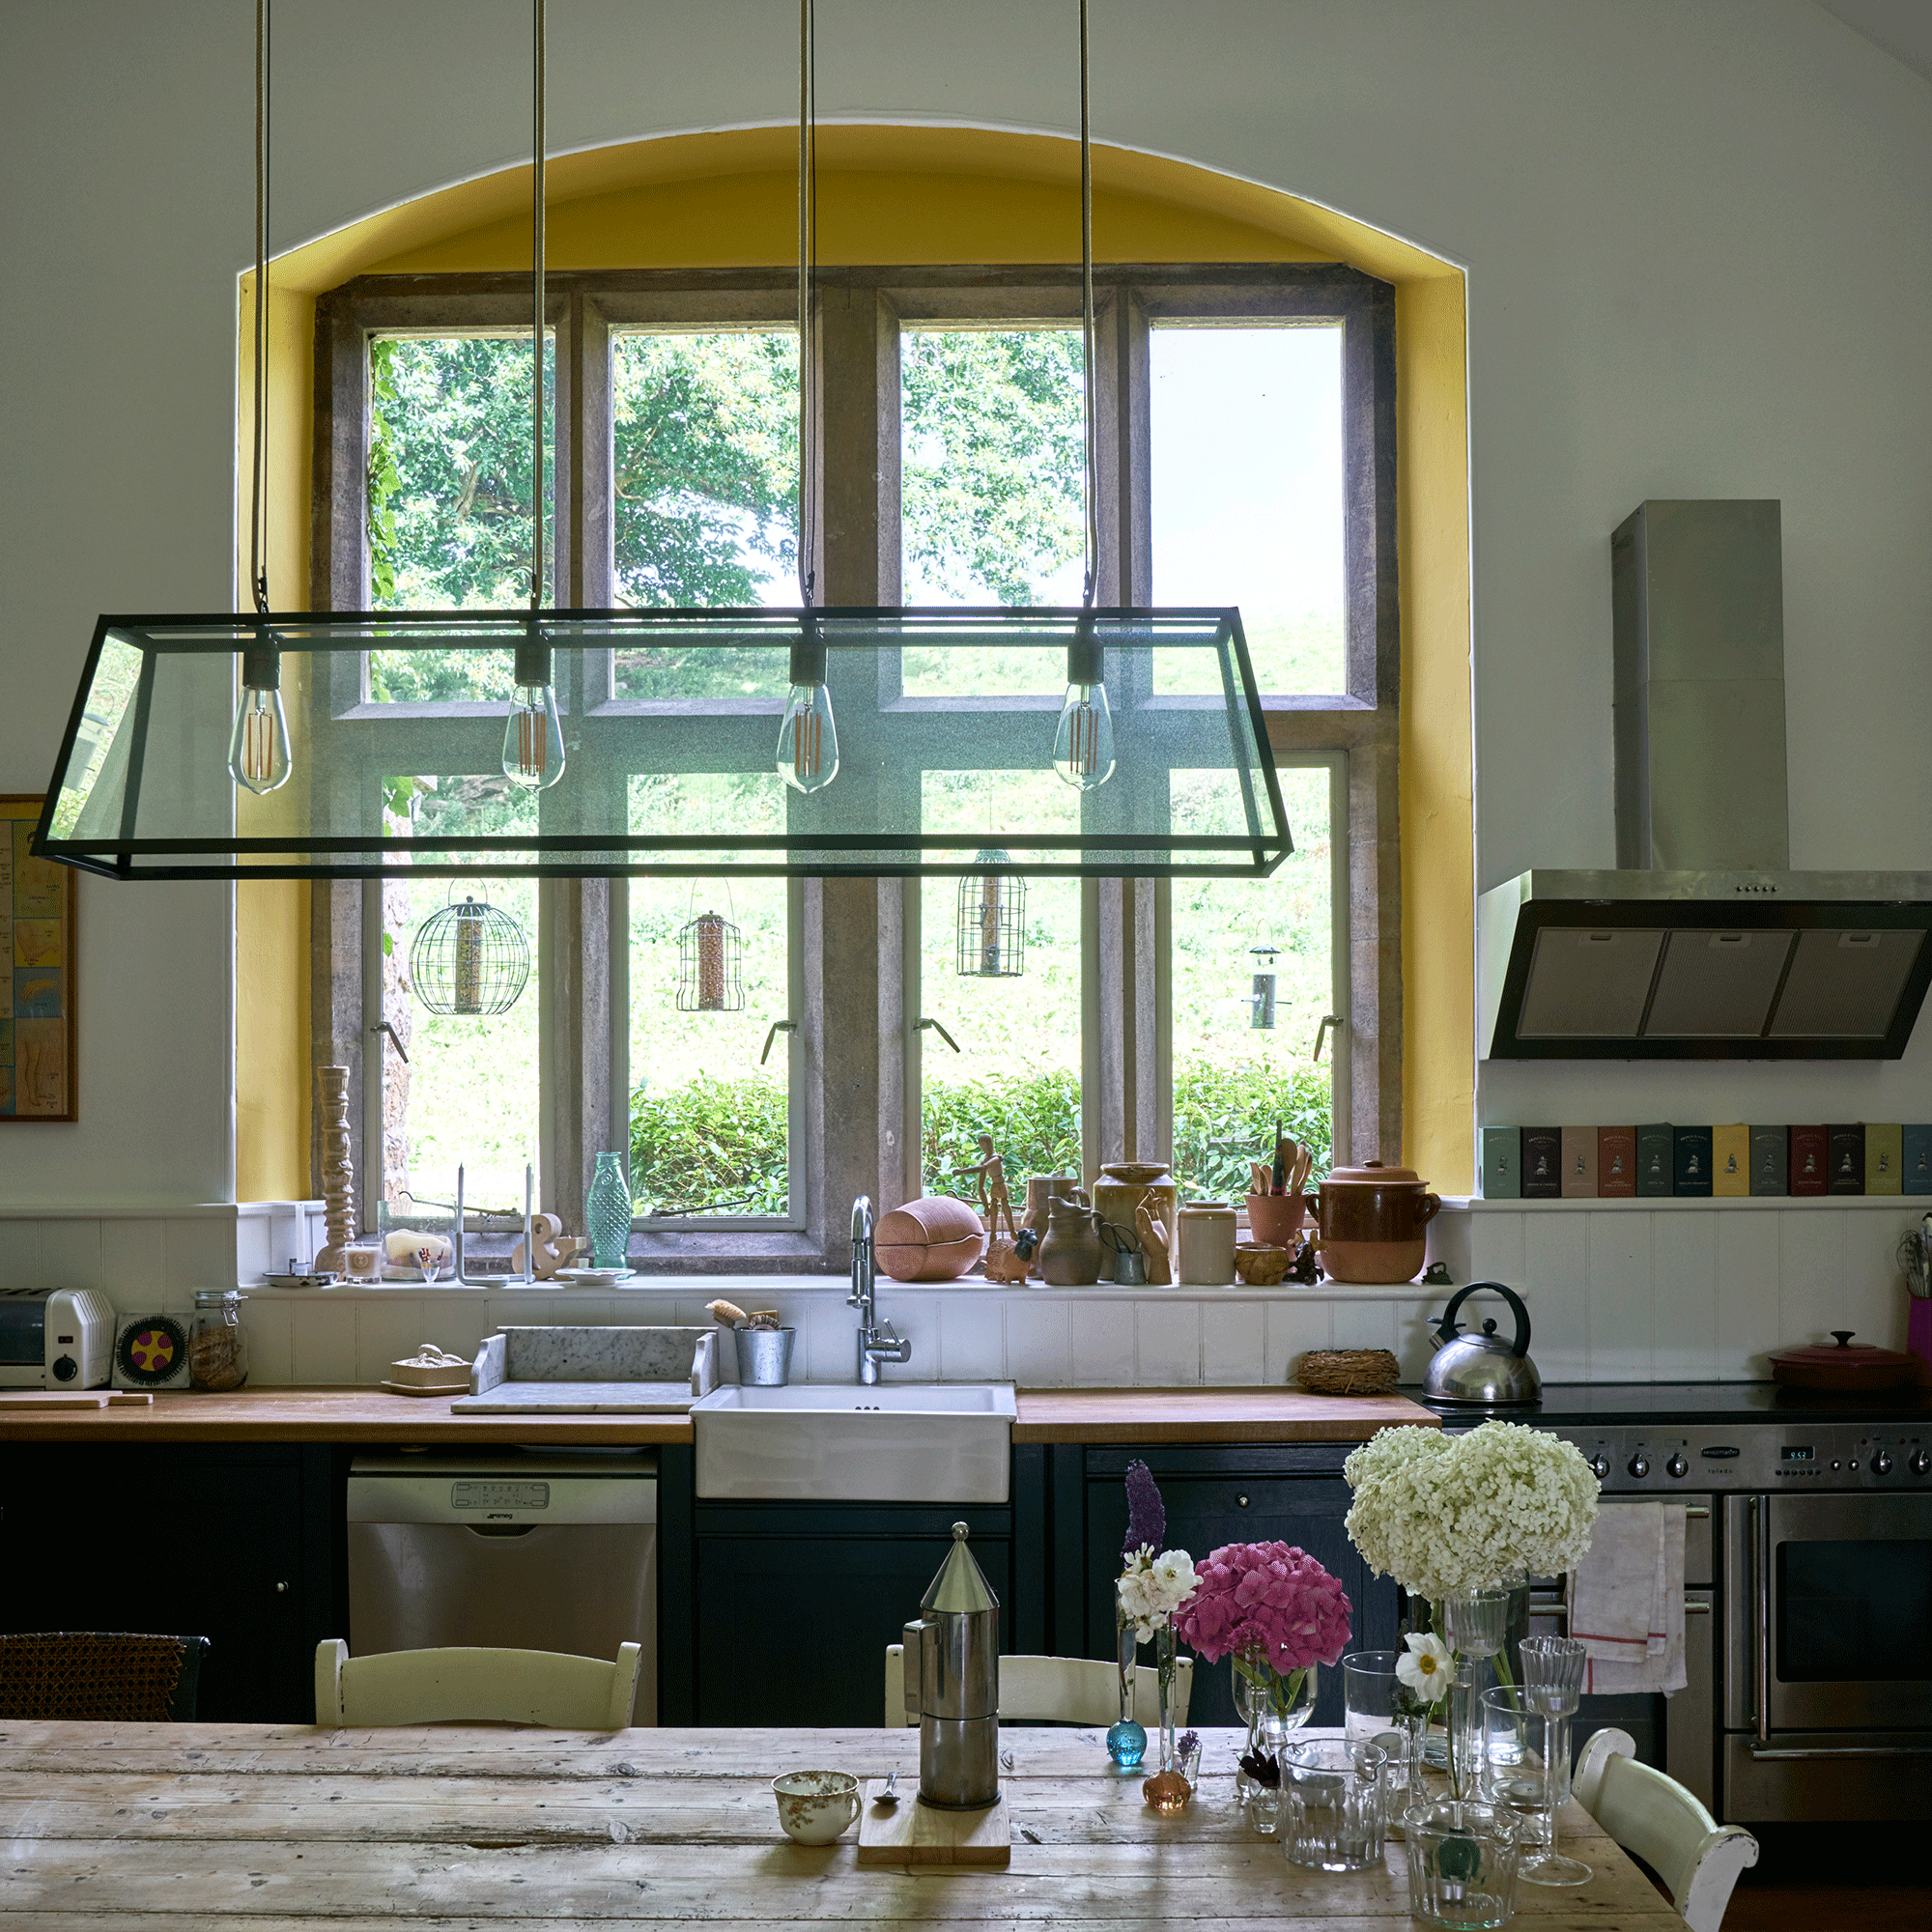 Kitchen with yellow window